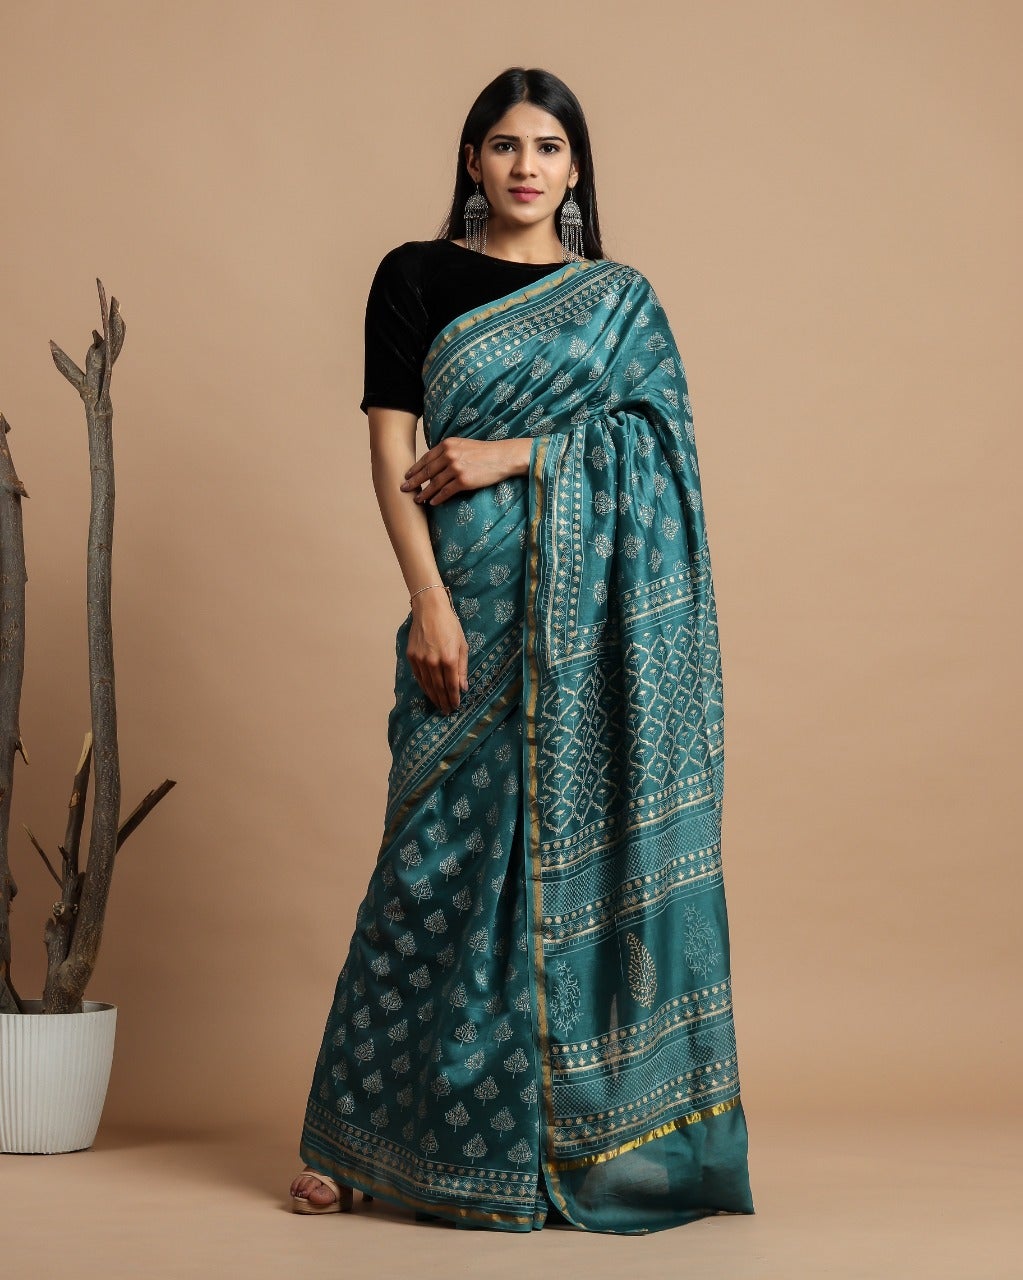 Subhash brand new Sarbani sarees catalogue | Limited stock | Book your  order now @rakeshsarees - YouTube